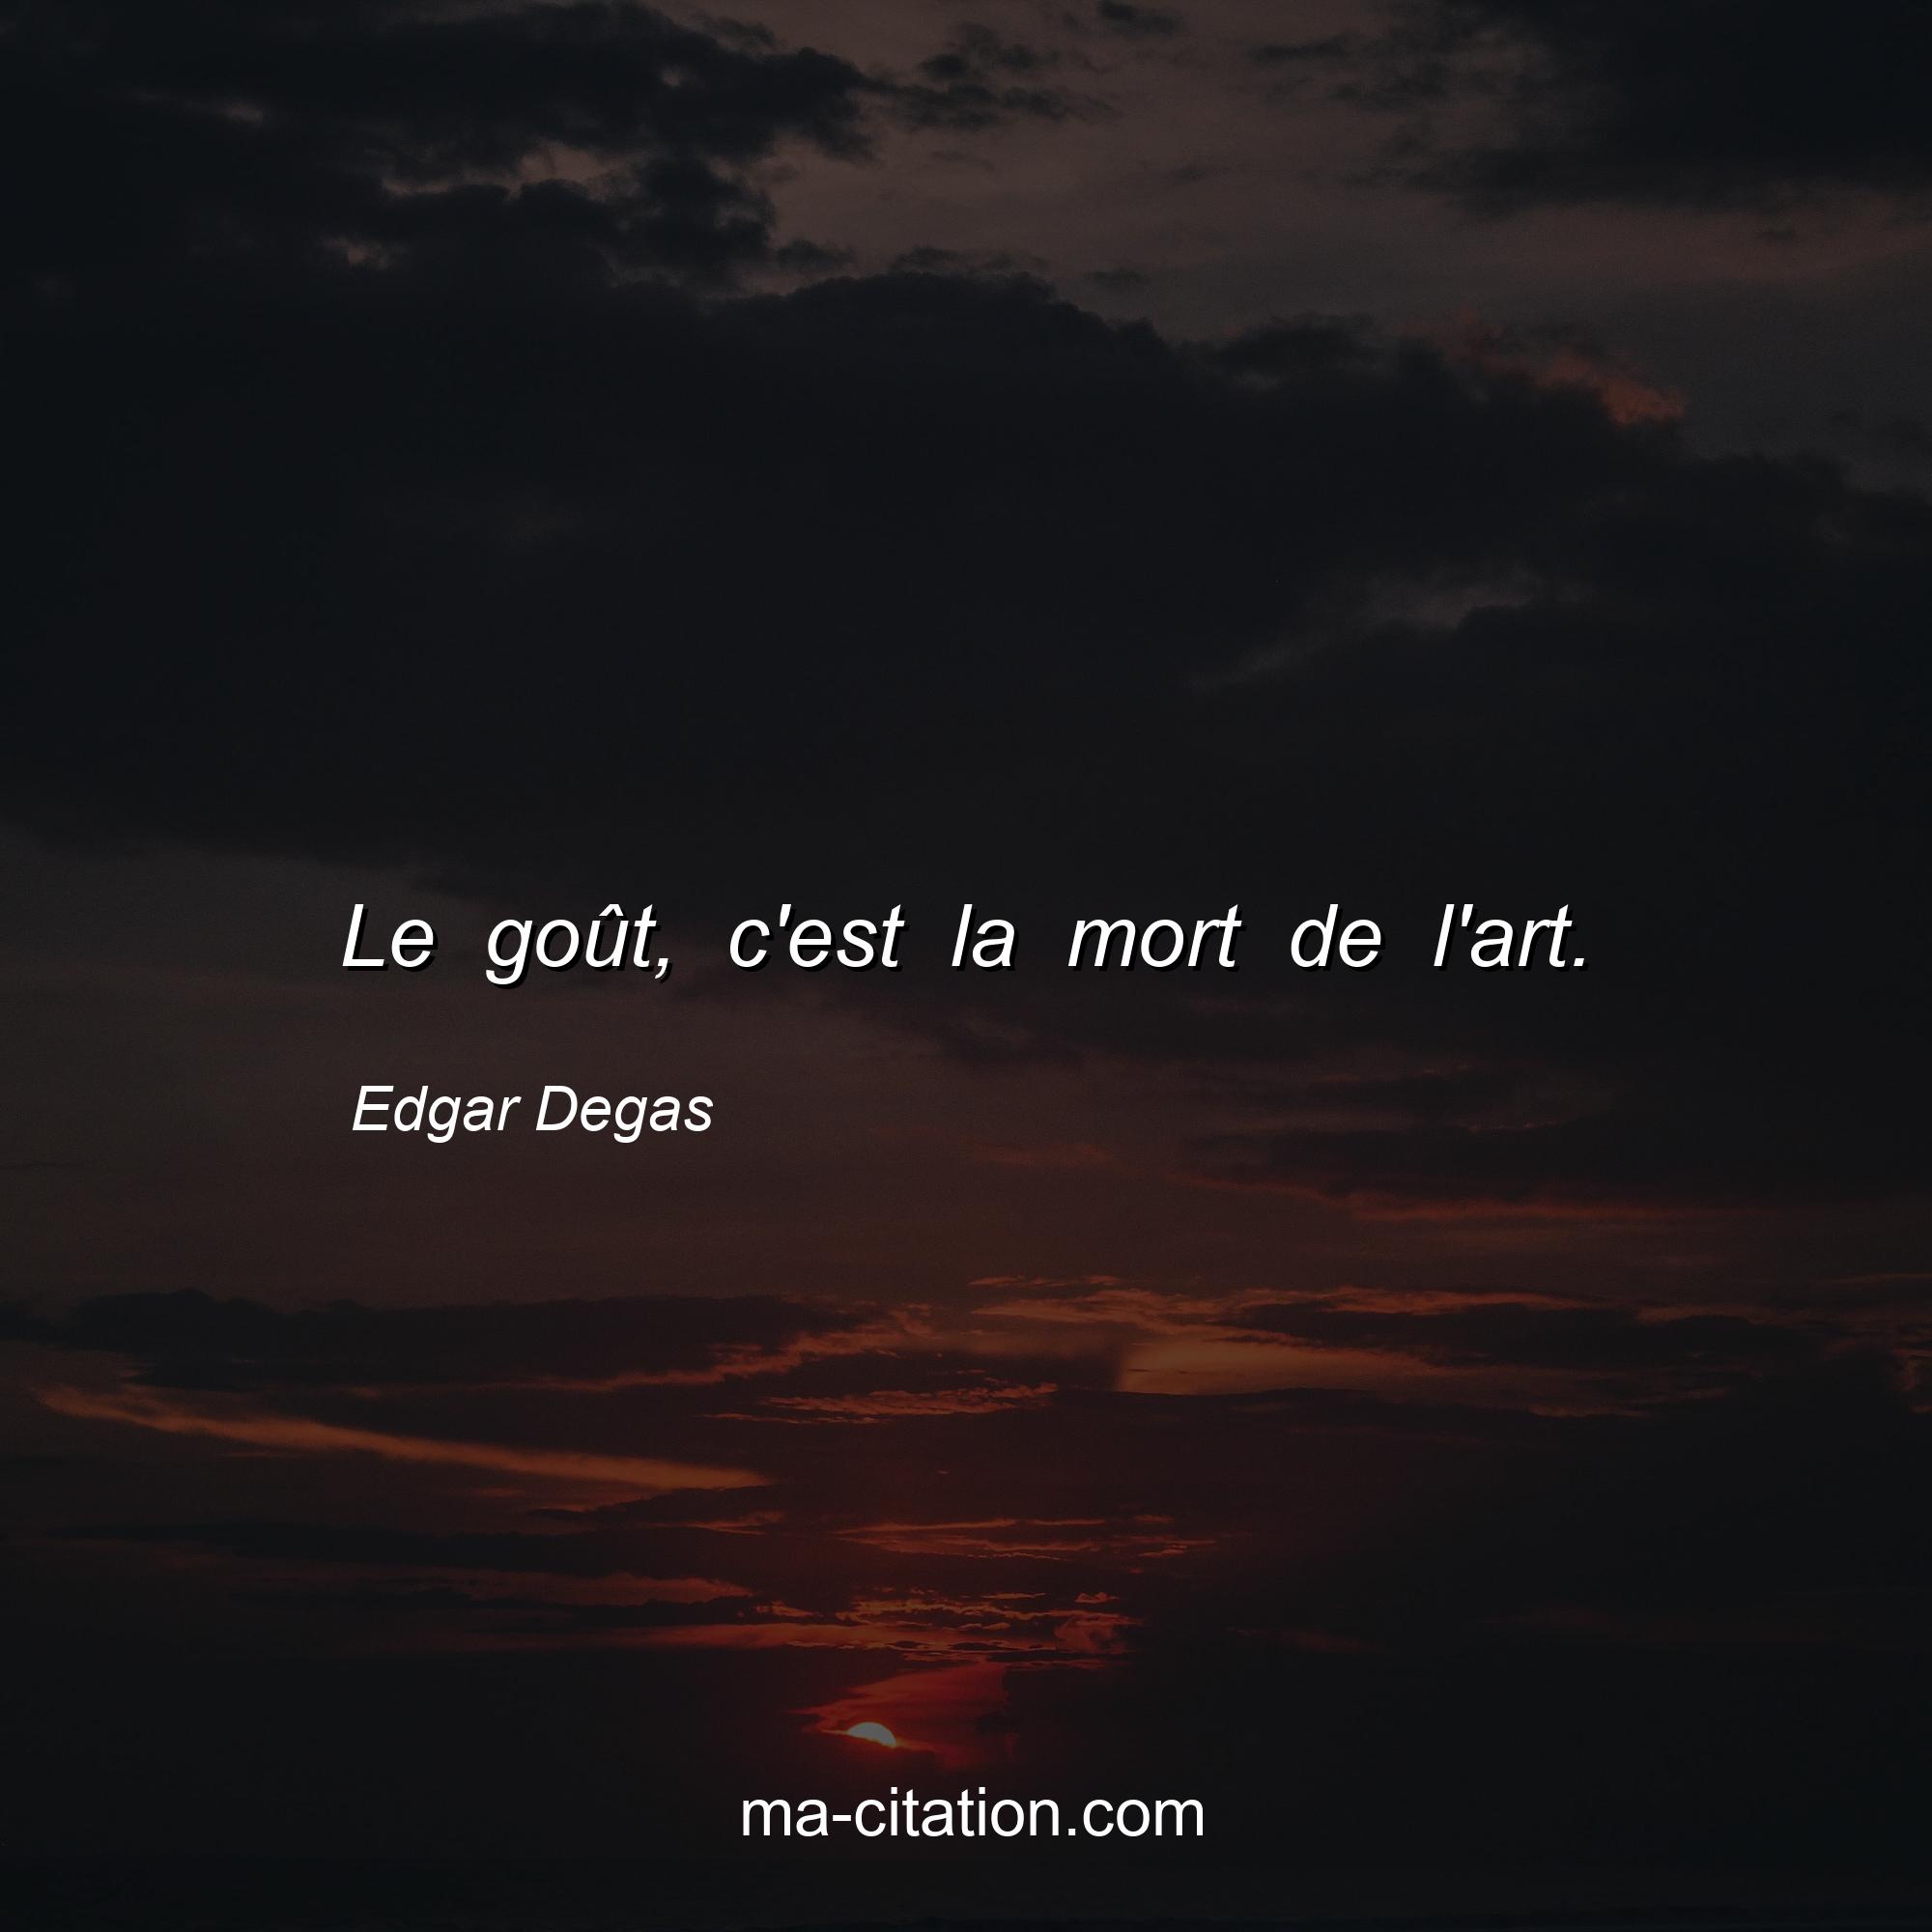 Edgar Degas : Le goût, c'est la mort de l'art.